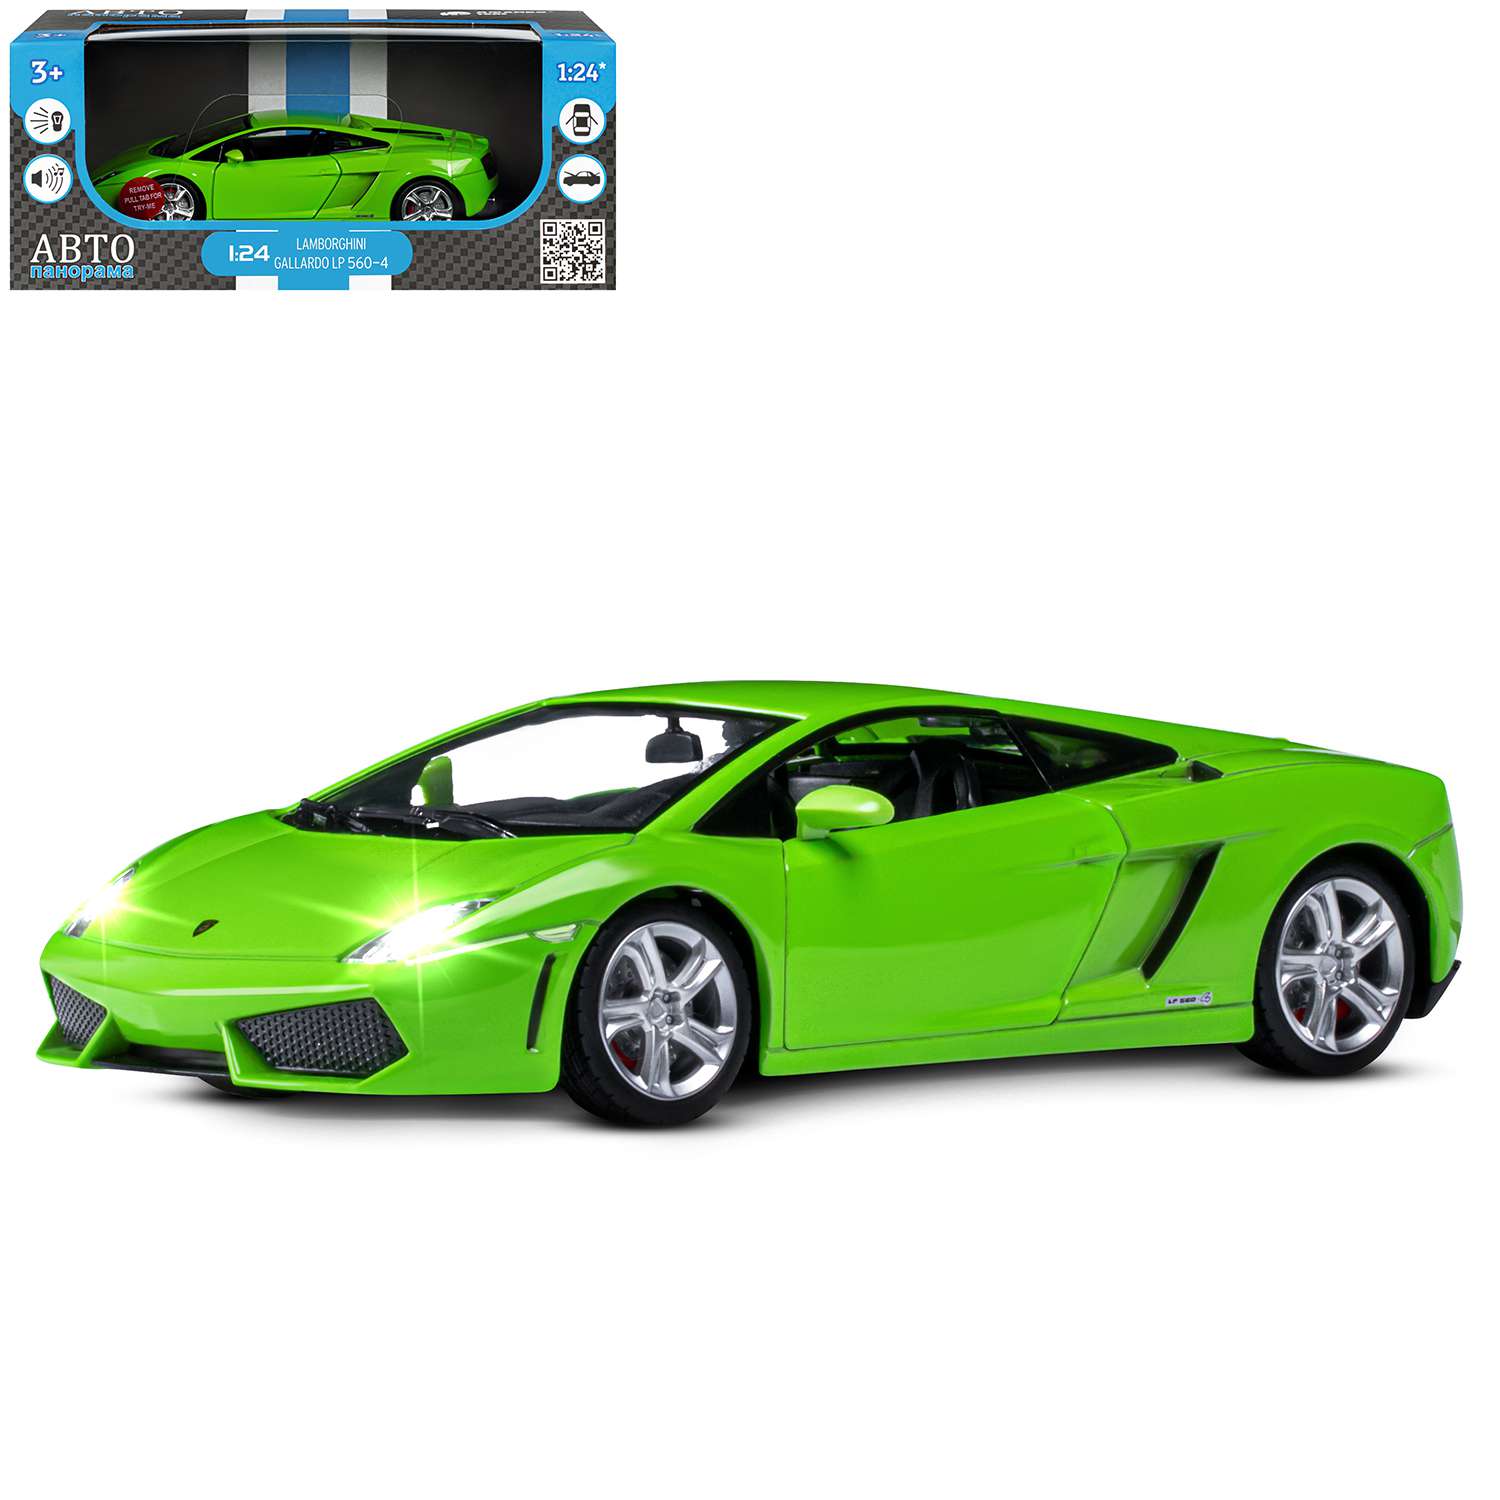 Машина JB1251382 Lamborghini Gallardo LP560-4 металл 1:24 зеленый свет, звук ТМ Автопанорама - Томск 